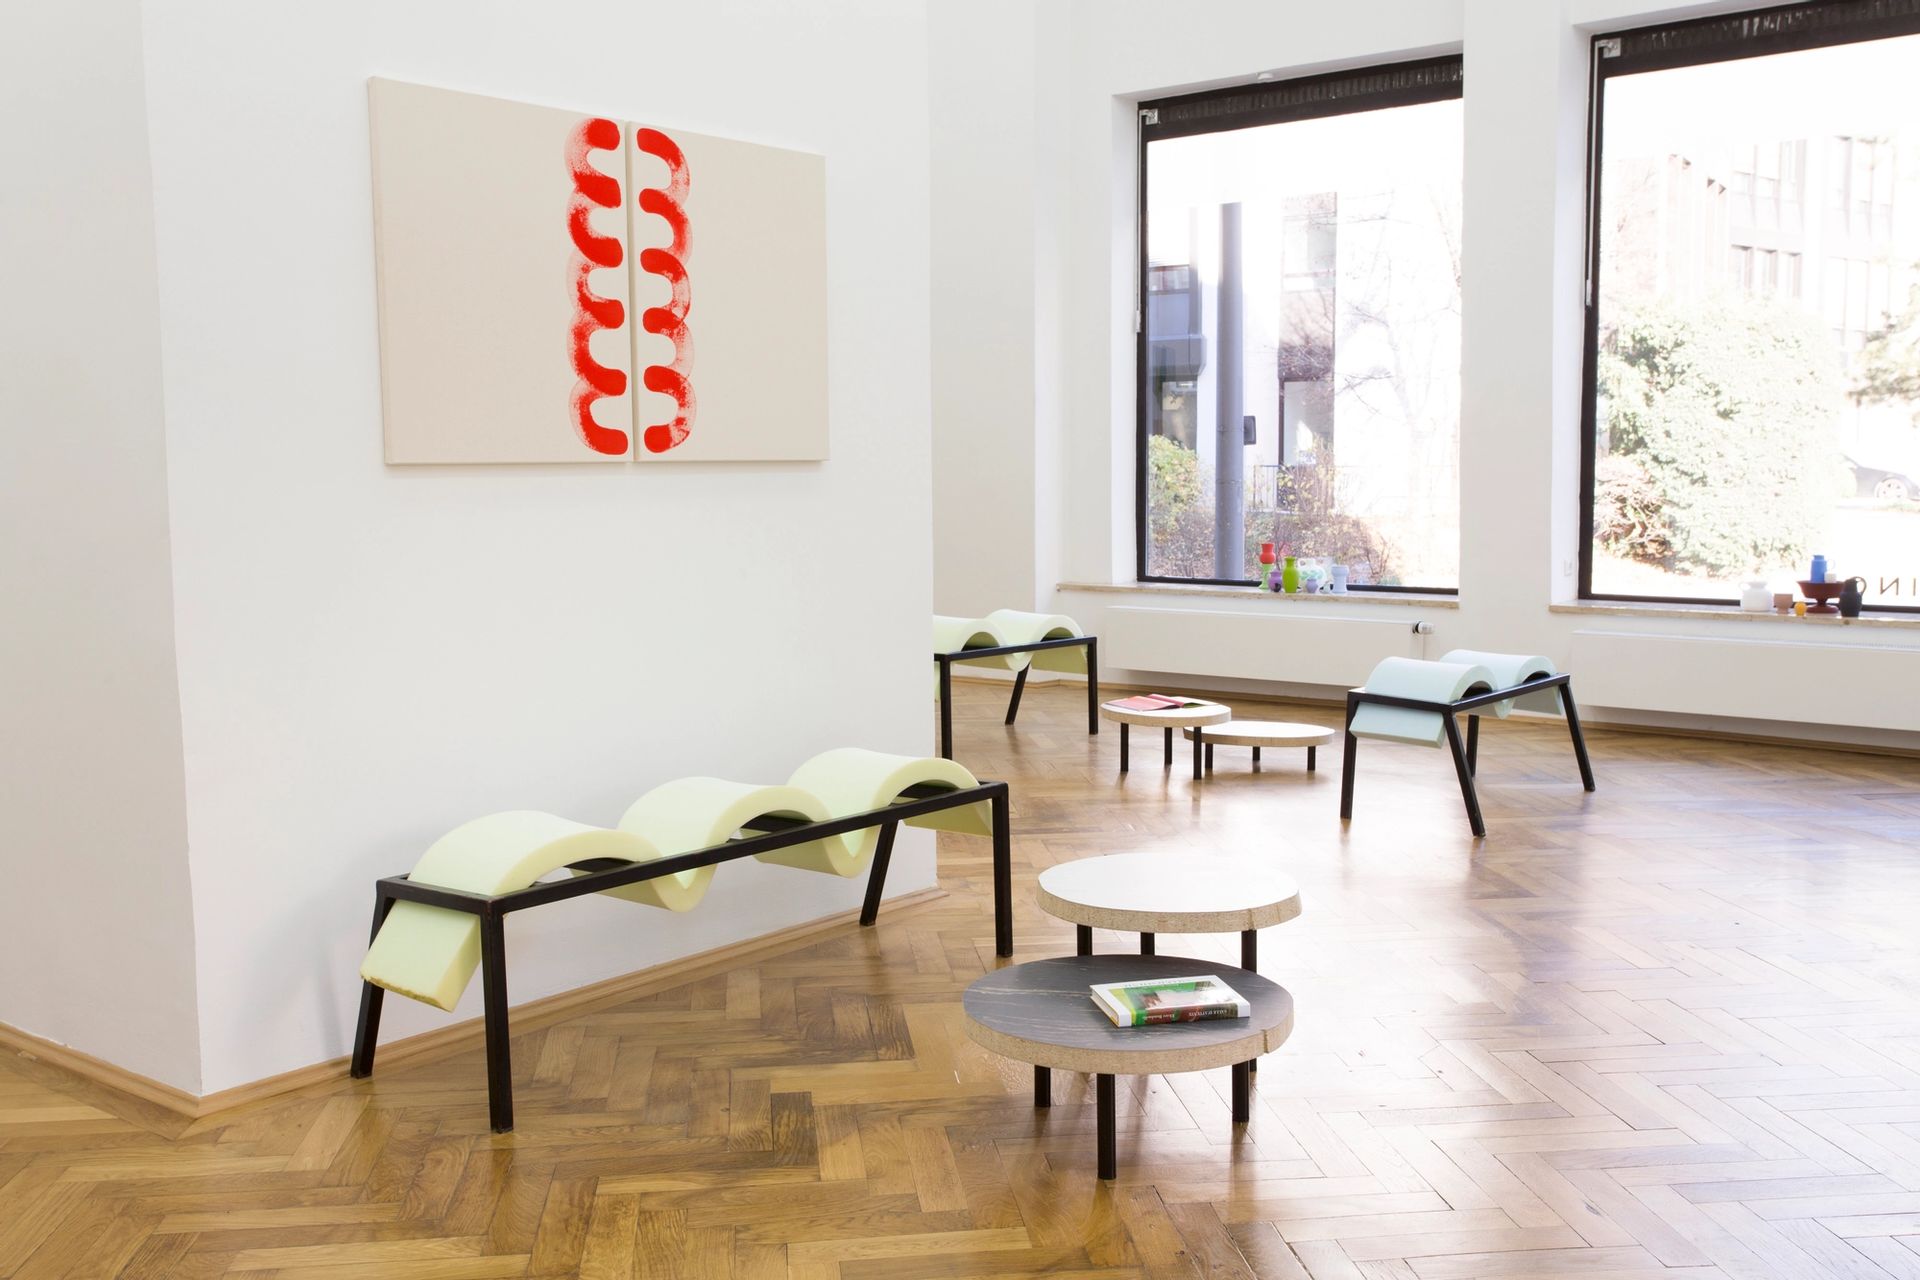 Installation view: Elvire Bonduelle, “waiting room #4”, 2015 (Elvire Bonduelle)